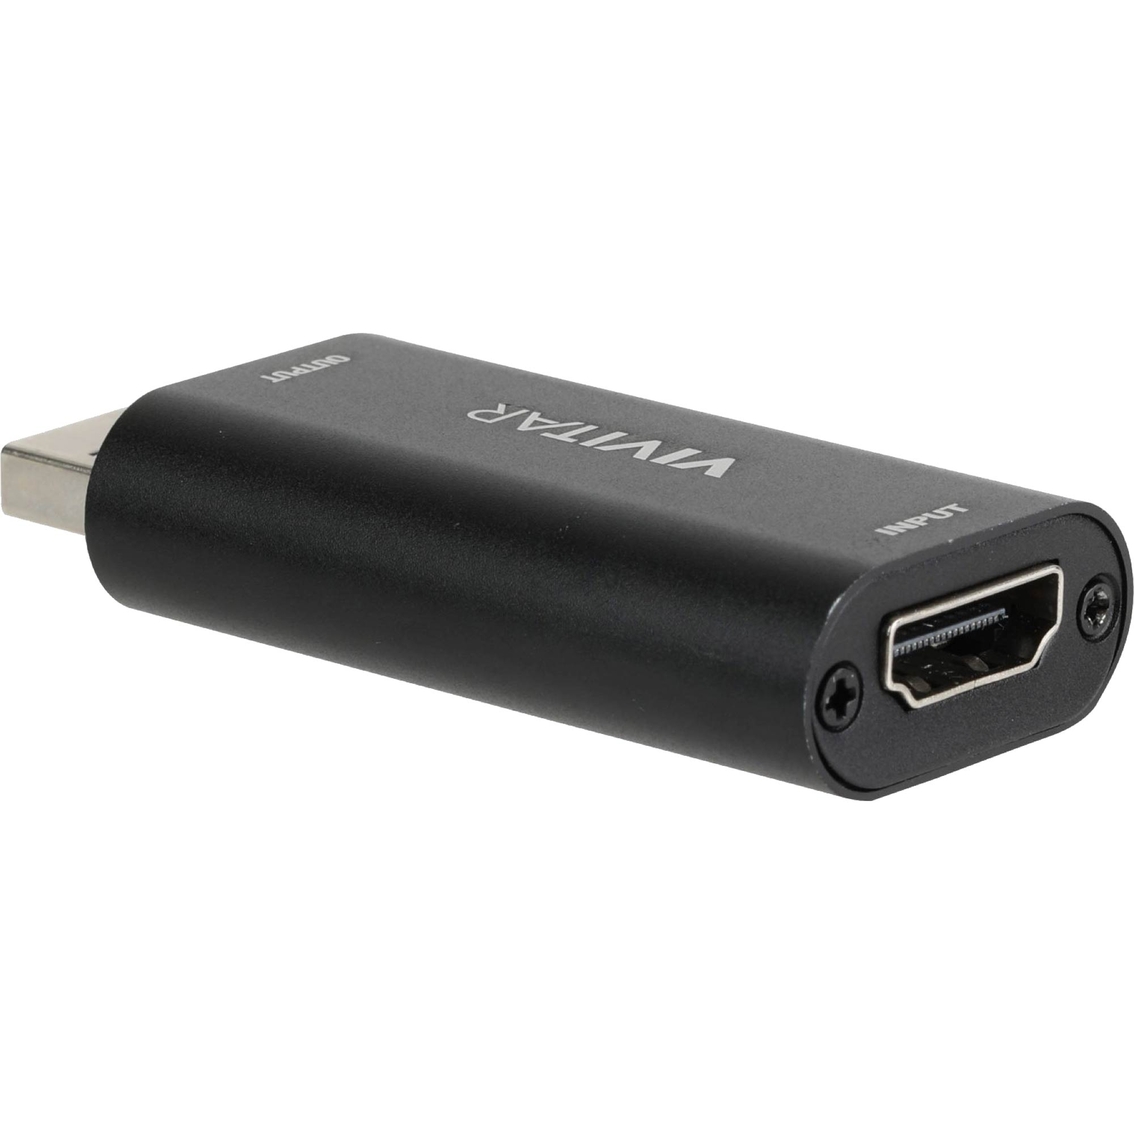 Vivitar HDMI to USB Video Capture Card - Image 6 of 6